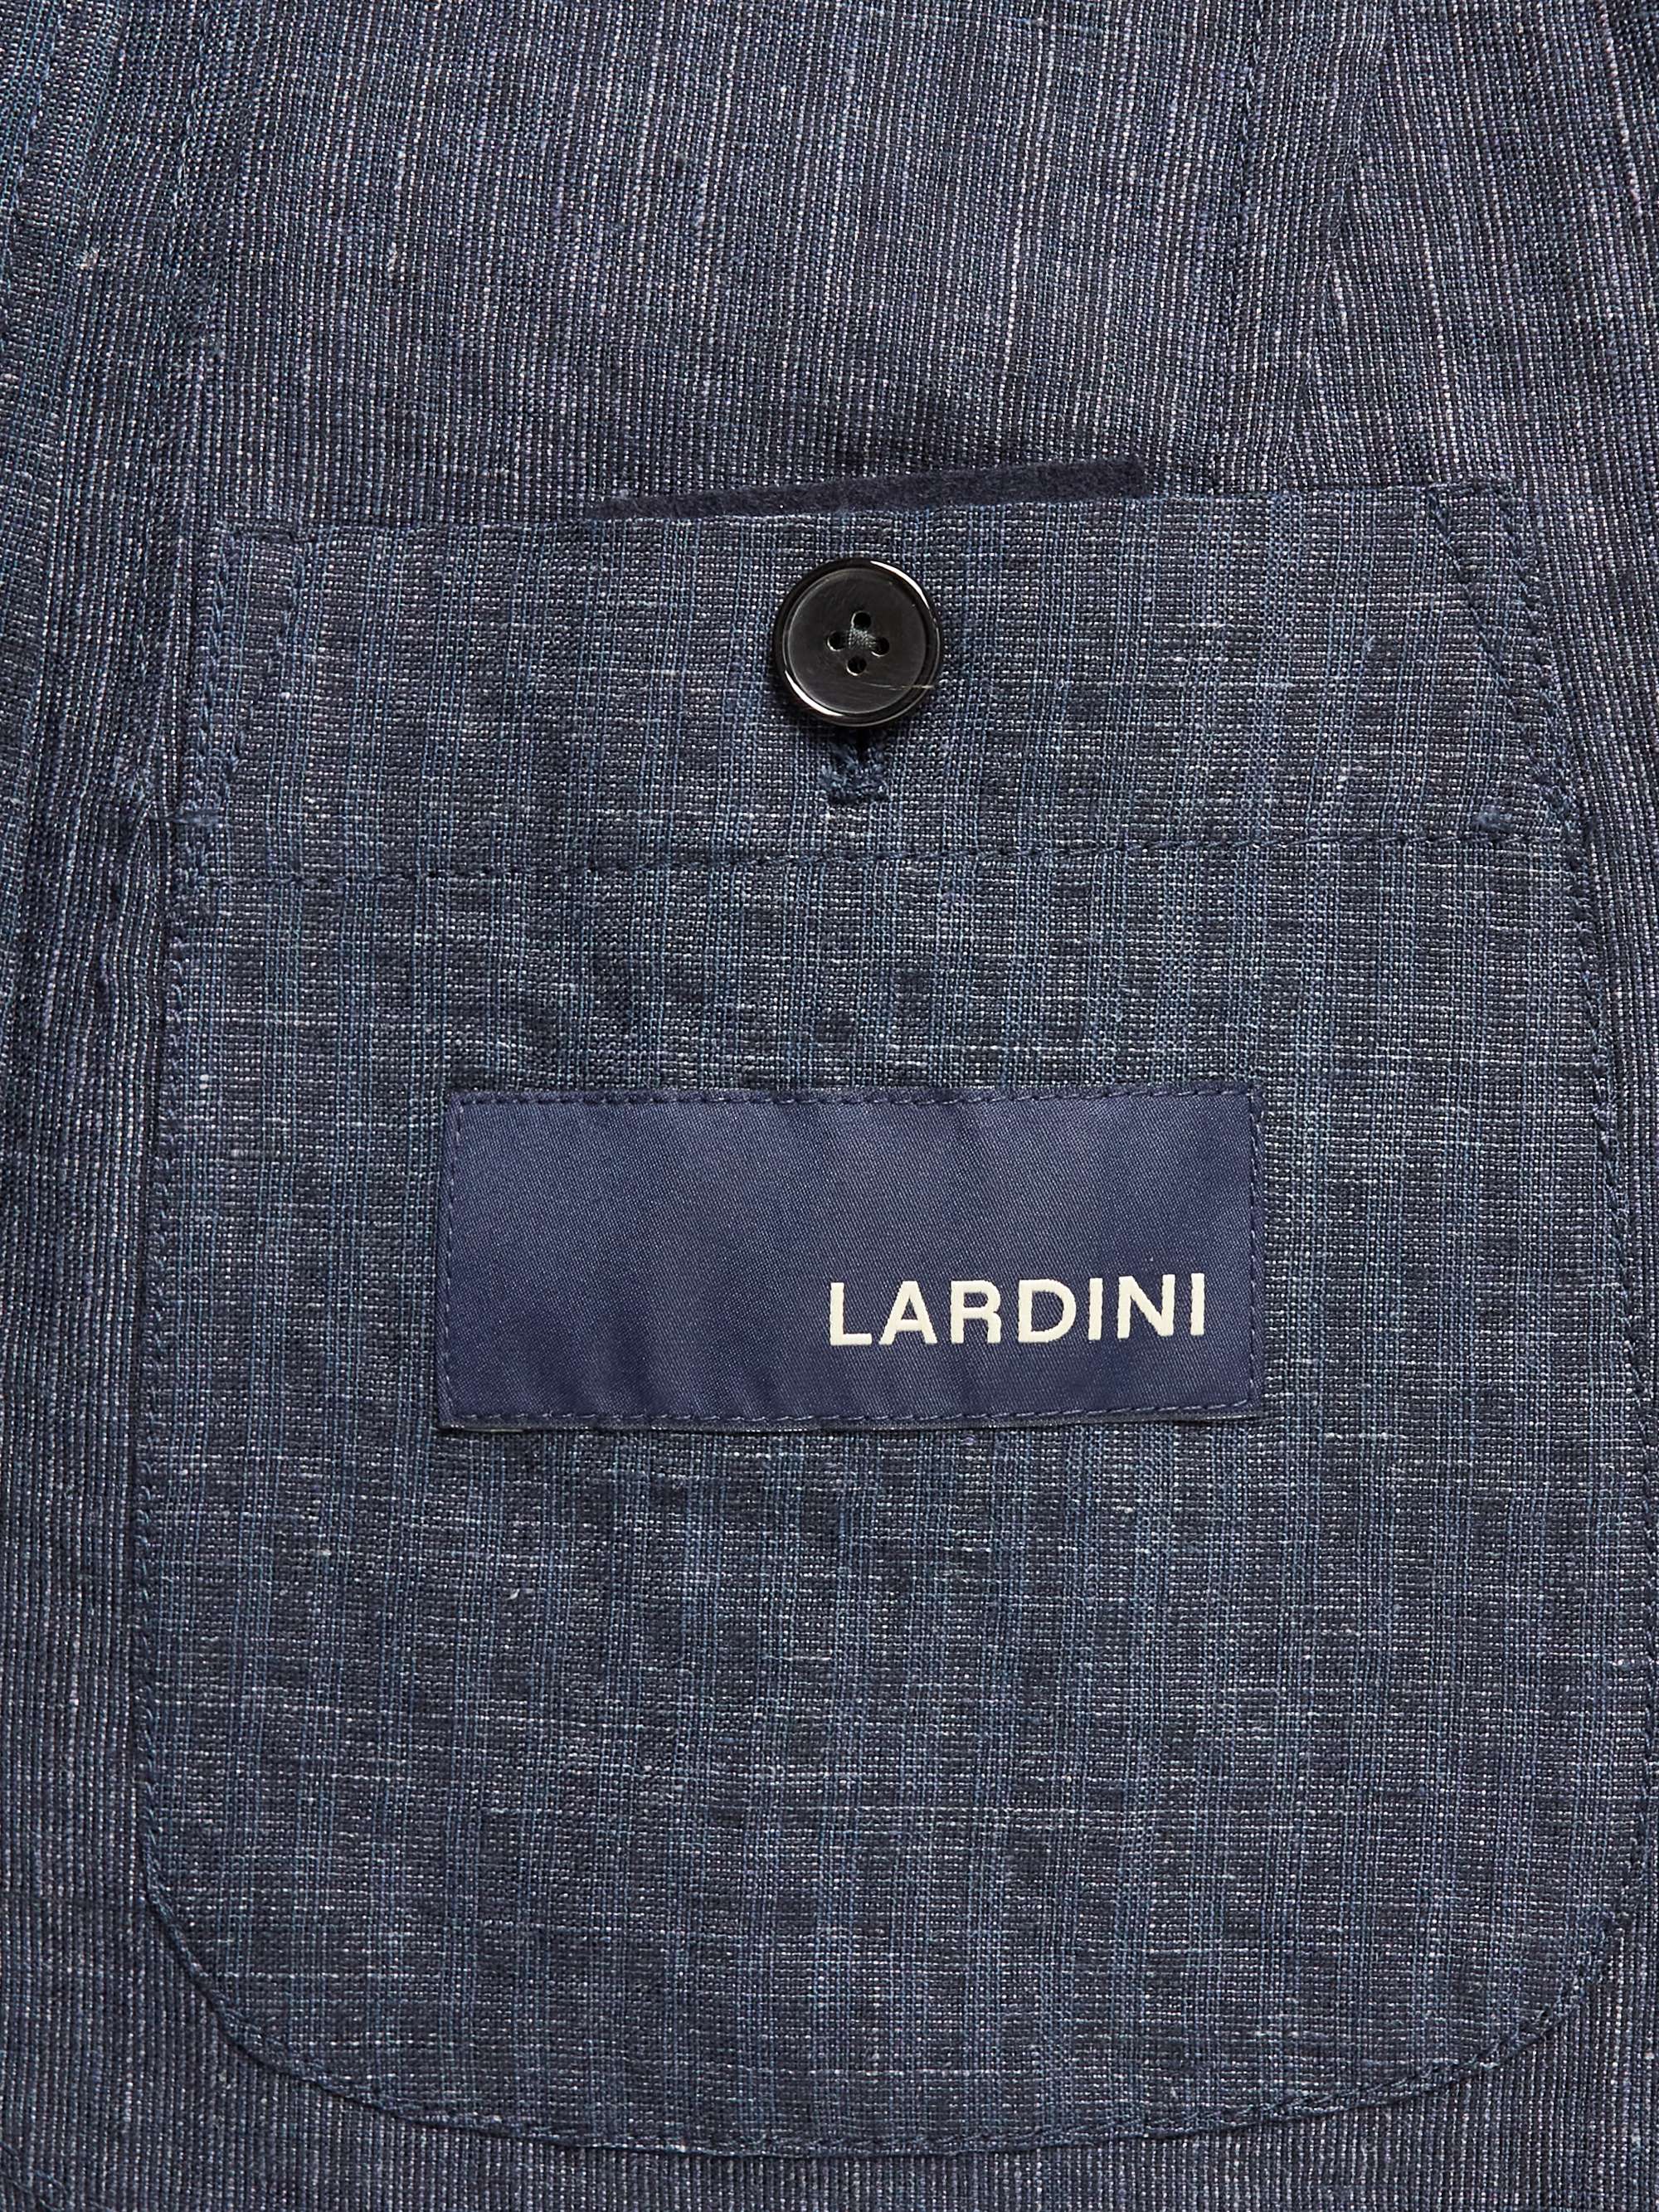 LARDINI Unstructured Striped Cotton-Blend Blazer